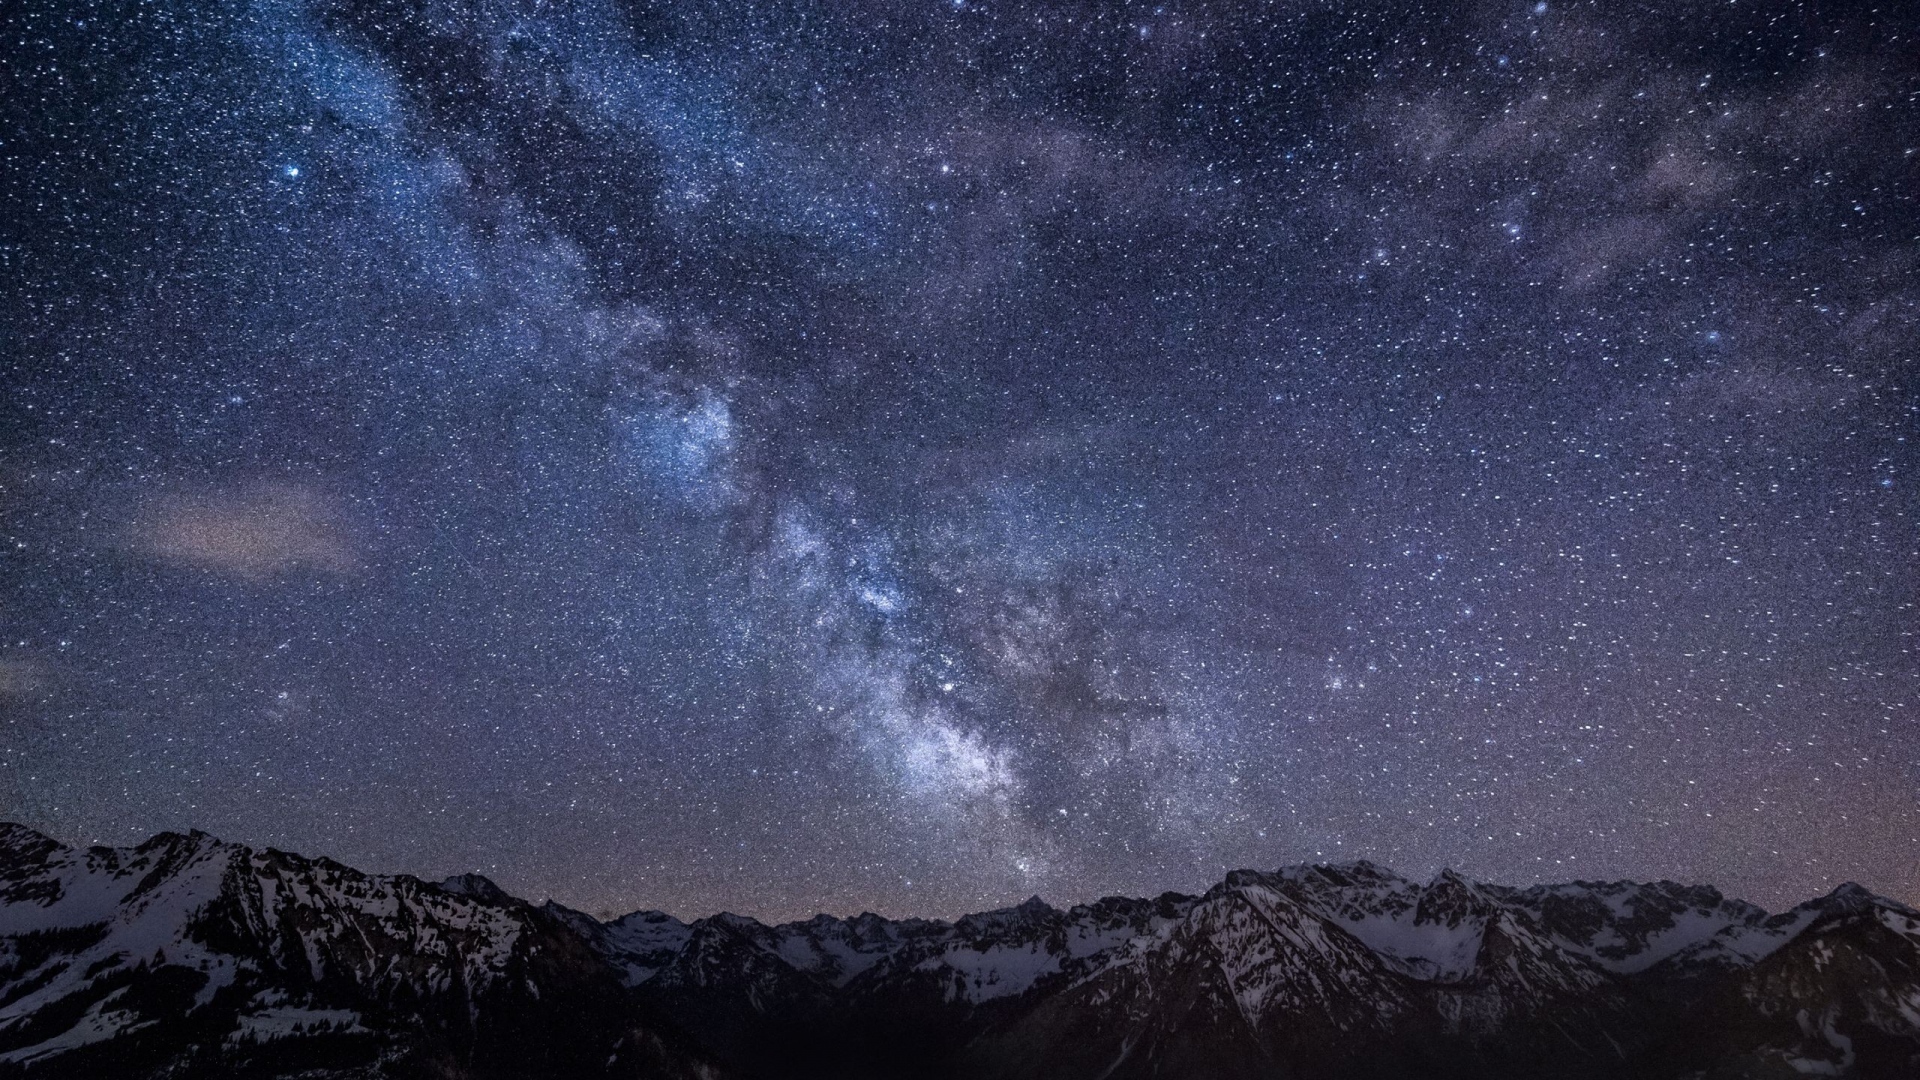  Mountains Night Sky Stars Wallpaper Background Full HD 1080p